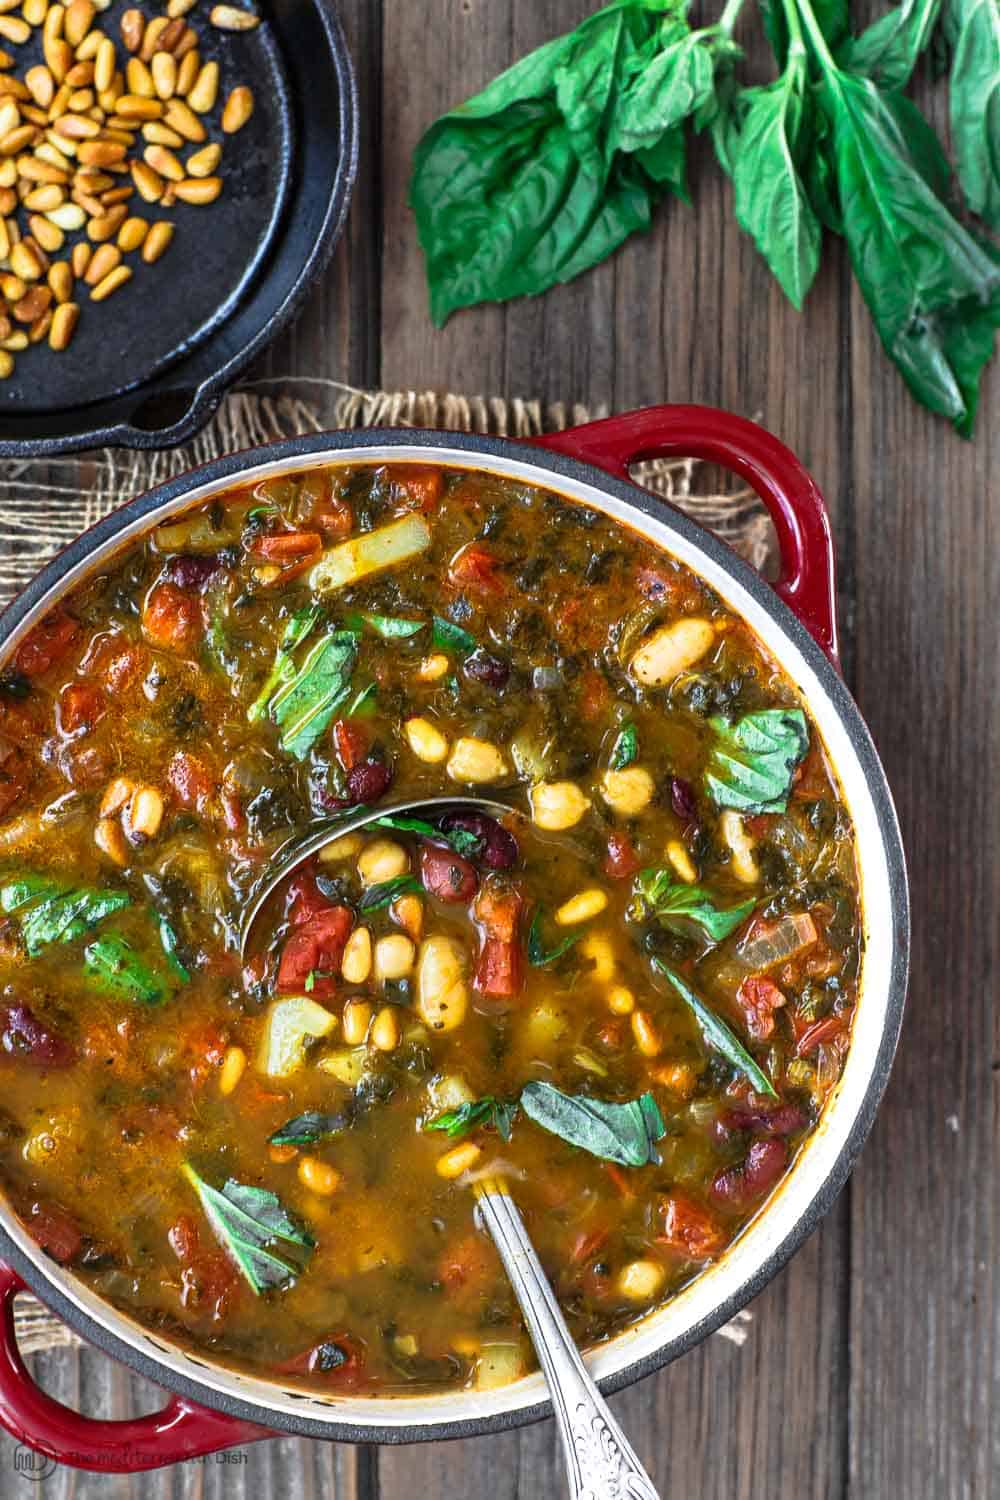 Mediterranean 3 bean soup with vegetables and tomato pesto